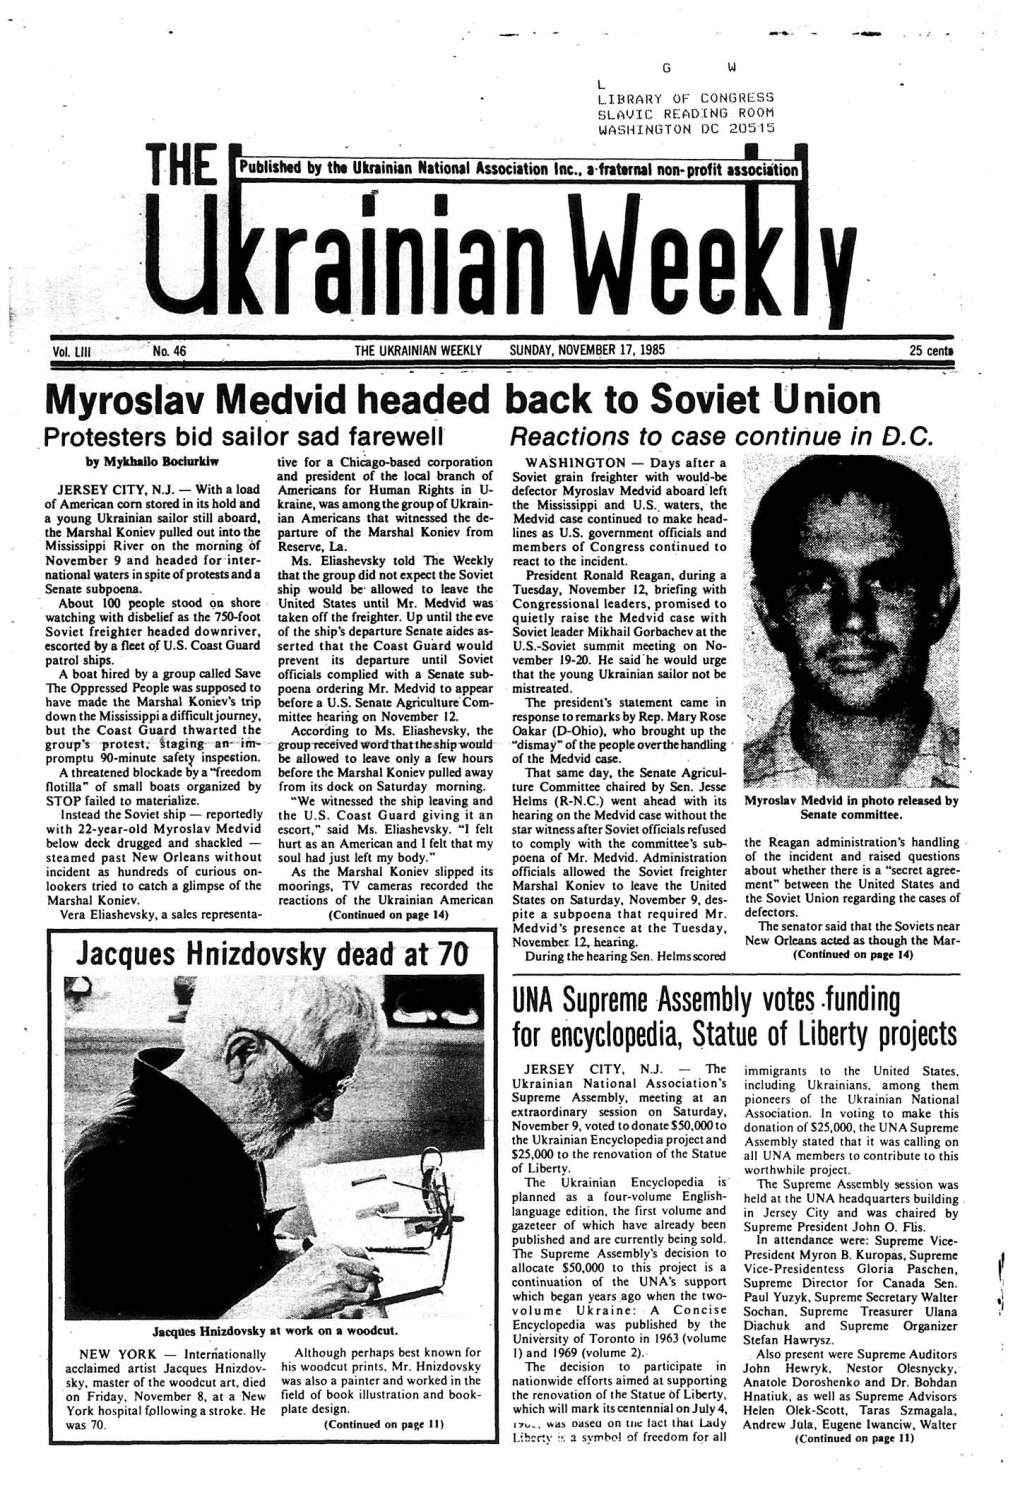 The Ukrainian Weekly 1985, No.46